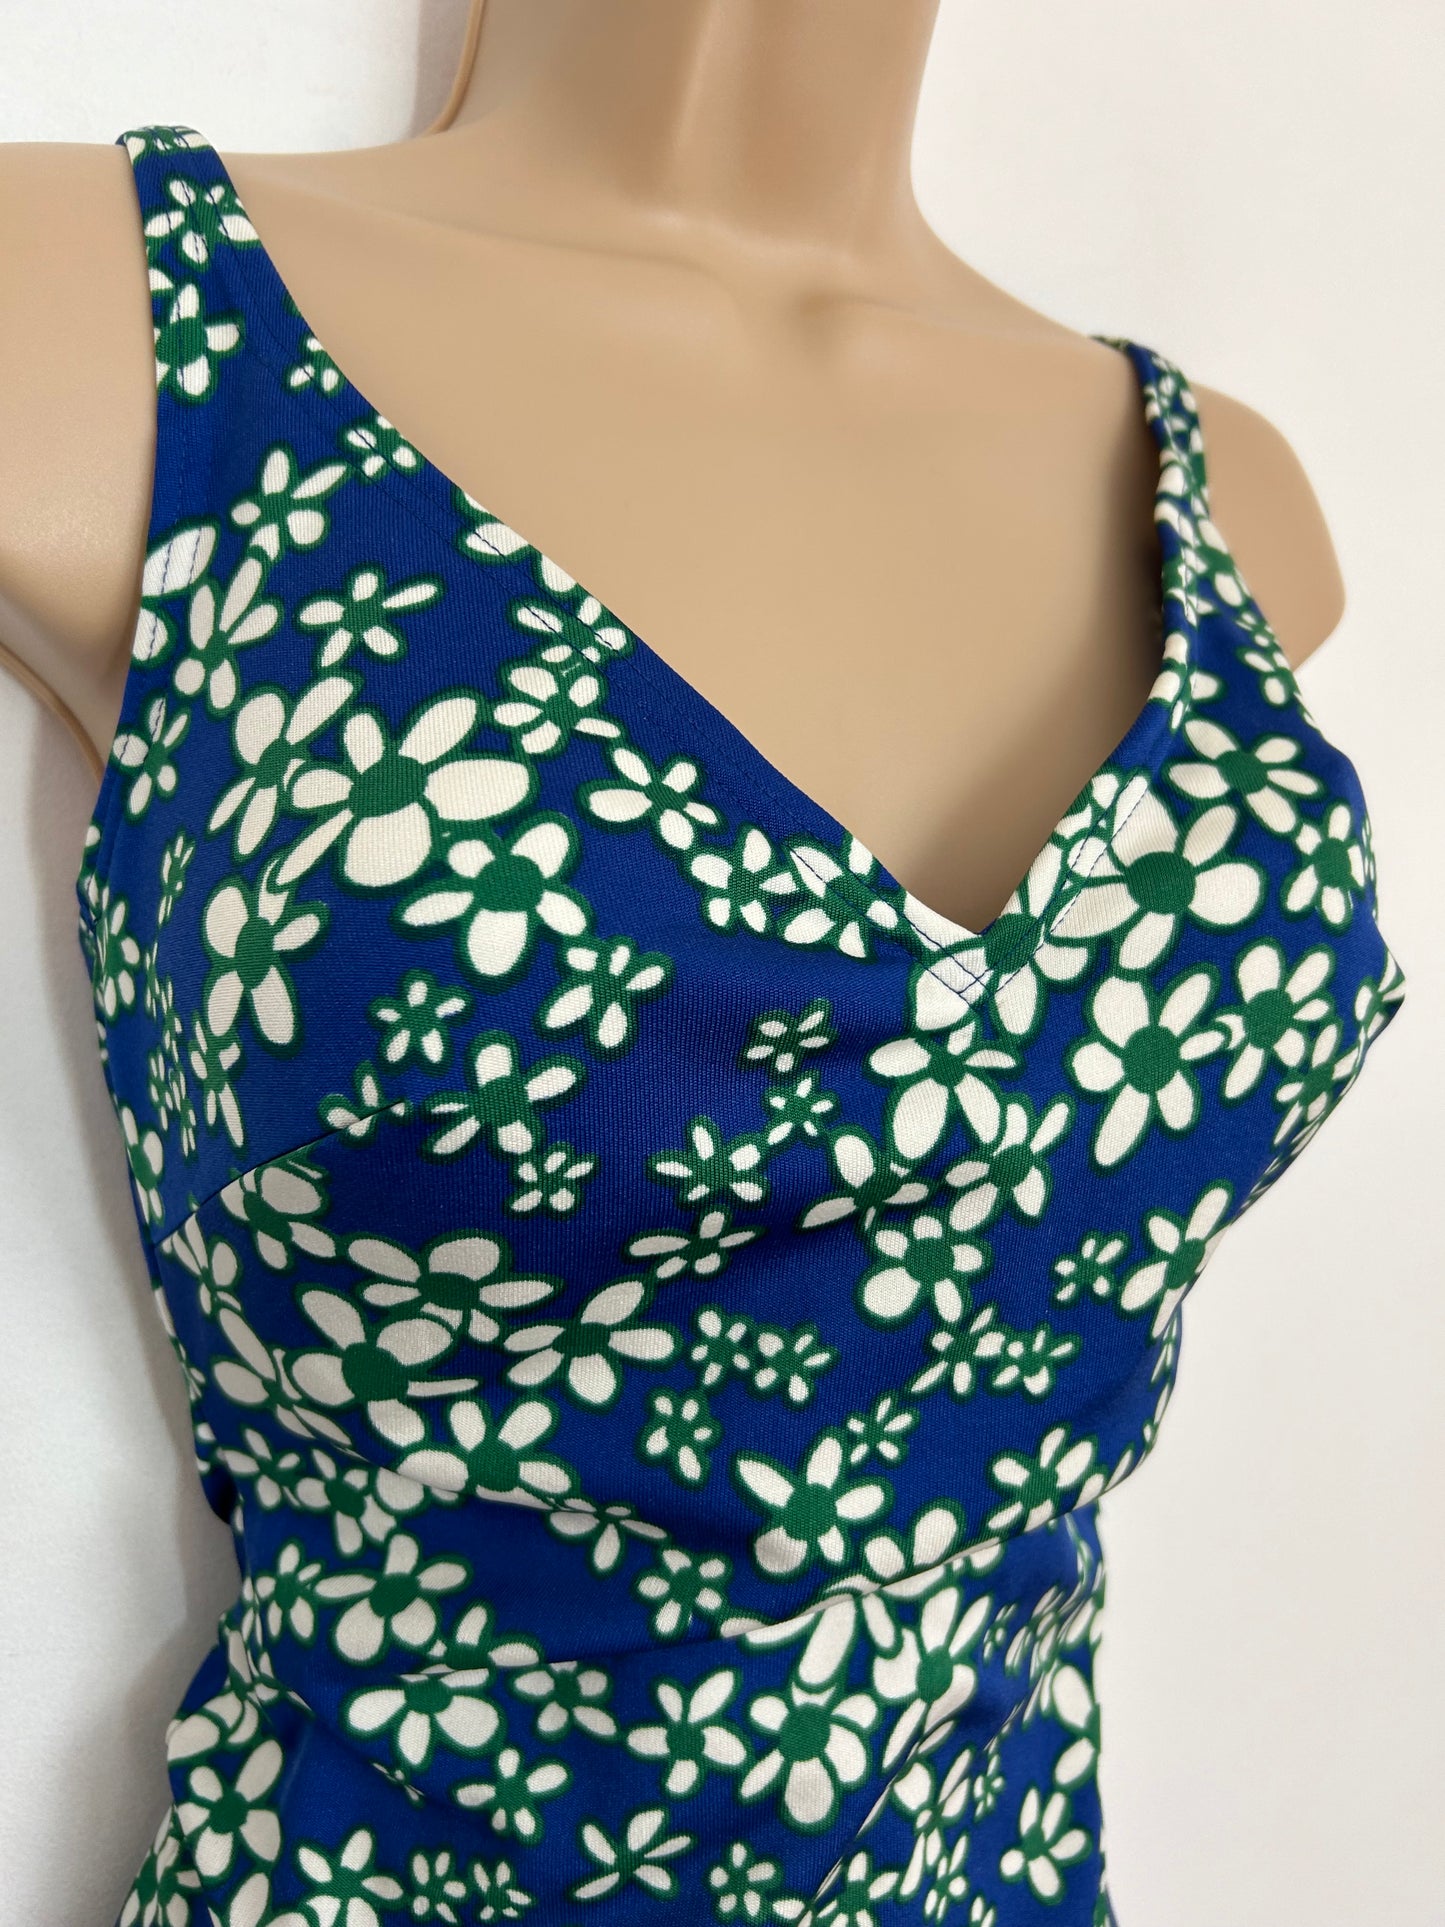 Vintage 1960s BLEYLE Approx UK Size 12 Blue Green & White Floral Print Low Cut Leg Swimsuit Bathing Costume